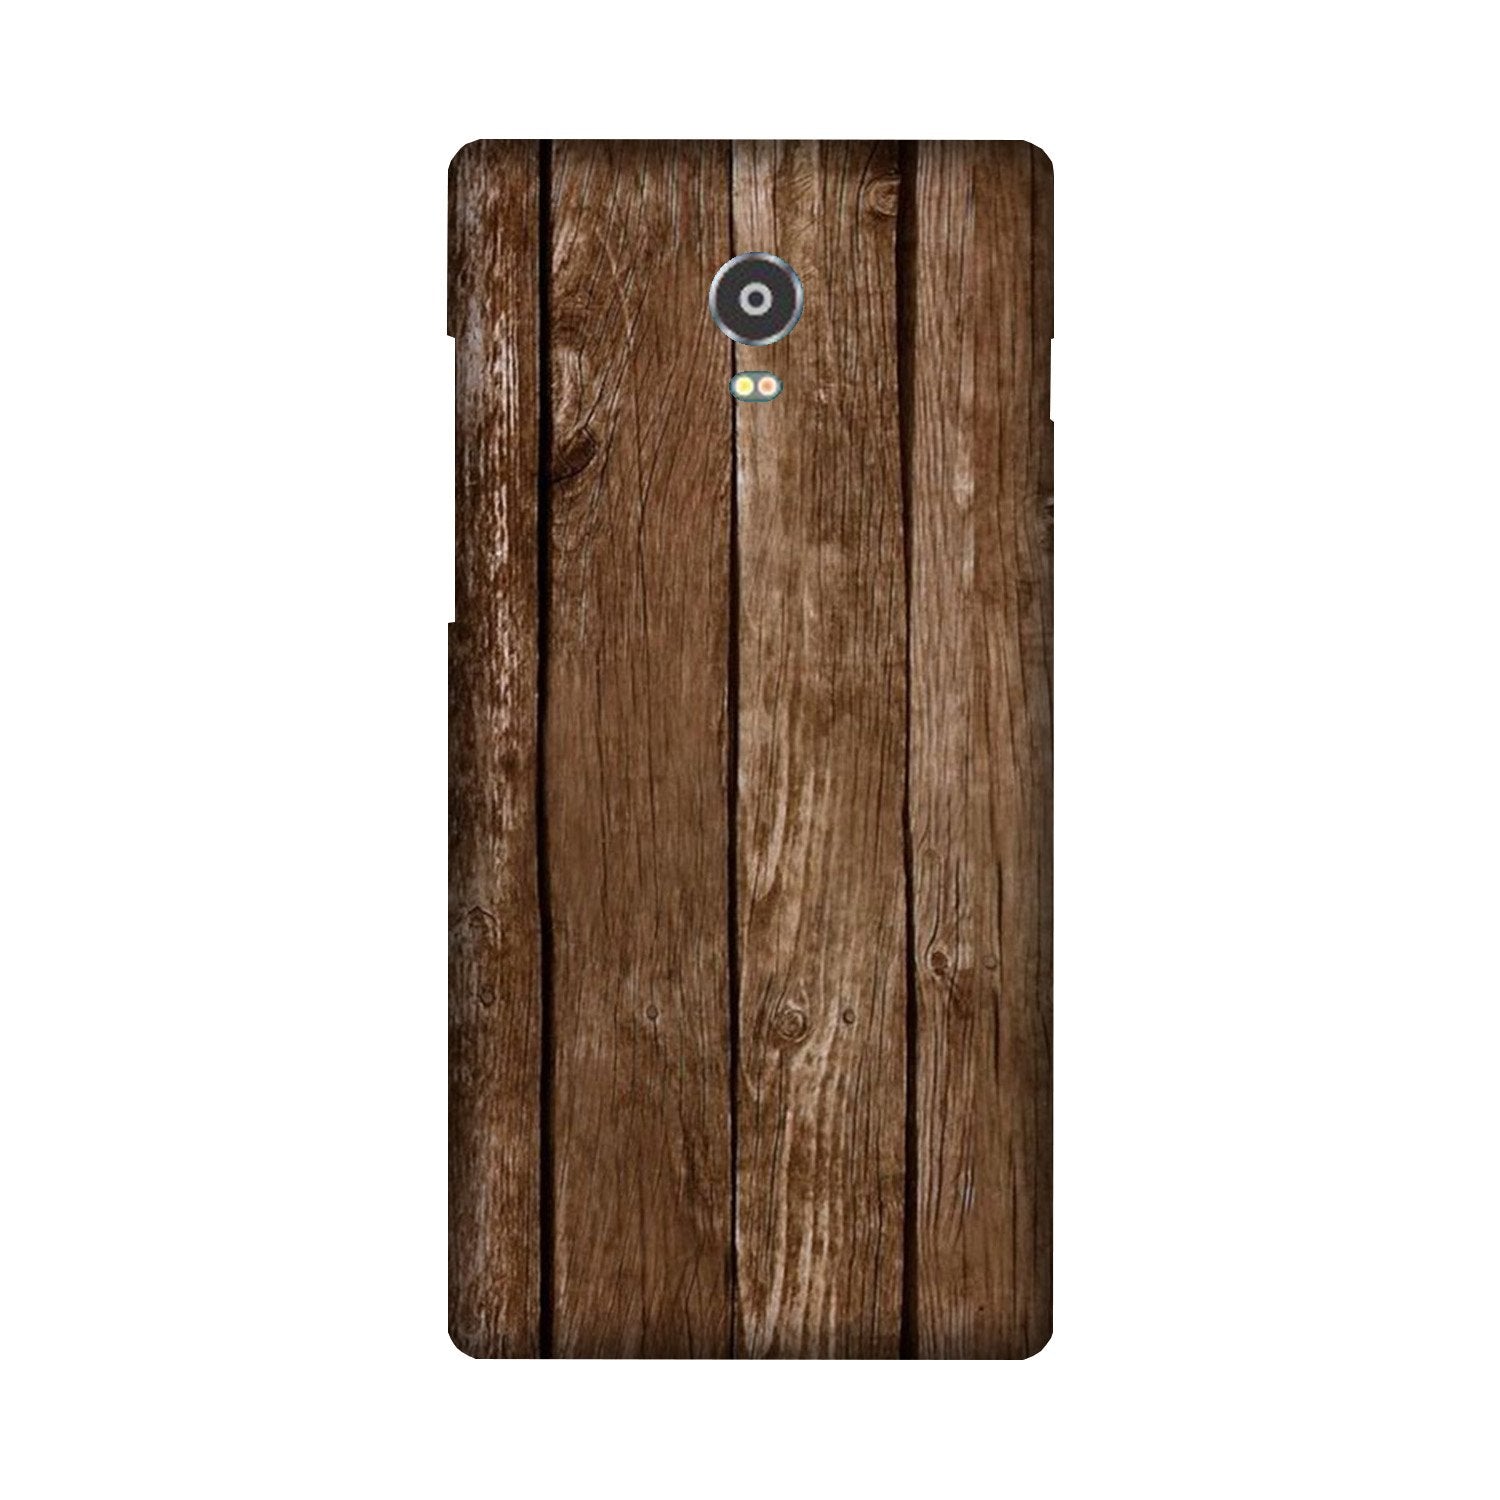 Wooden Look Case for Lenovo Vibe P1(Design - 112)